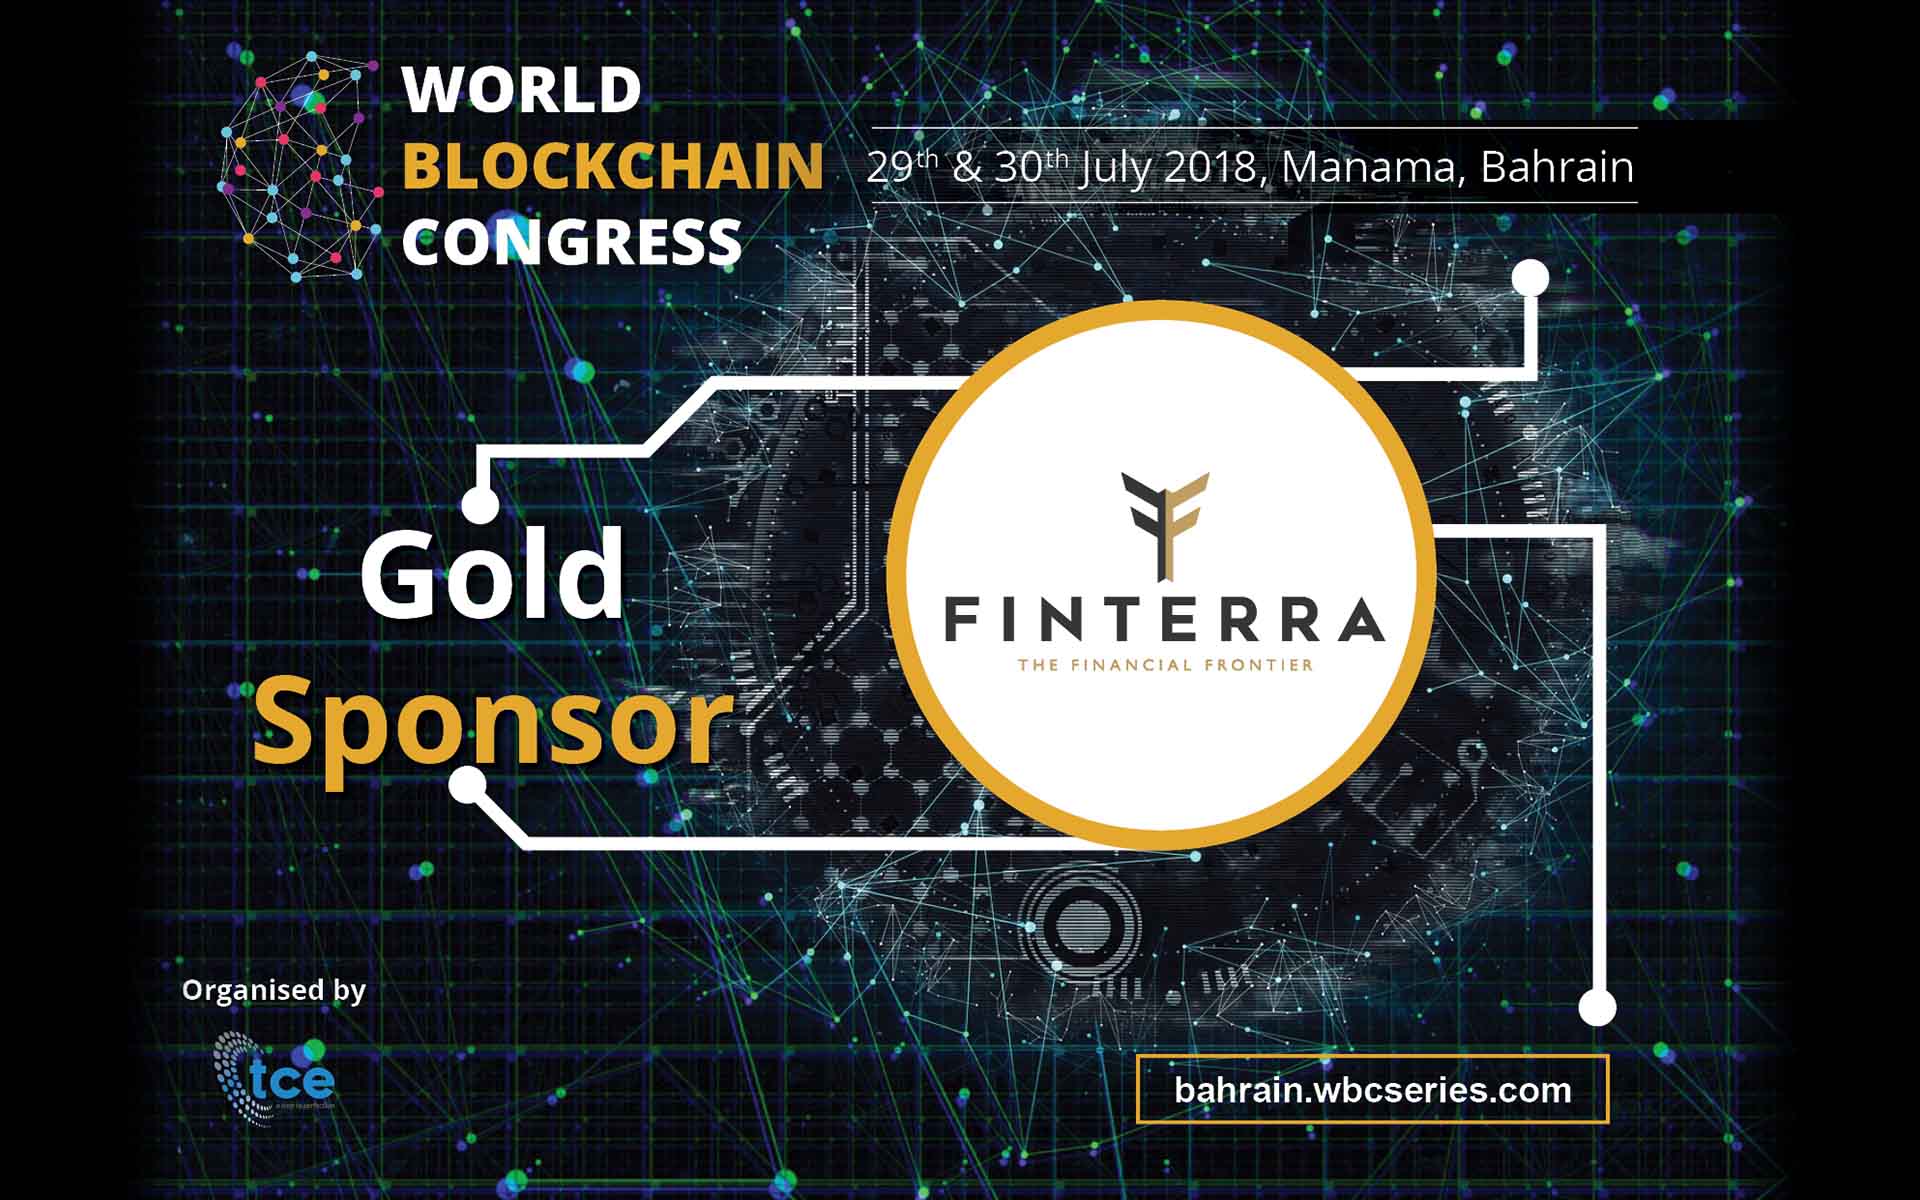 Finterra Pte Ltd Confirmed as the Official Gold Sponsor for World Blockchain Congress Bahrain 2018